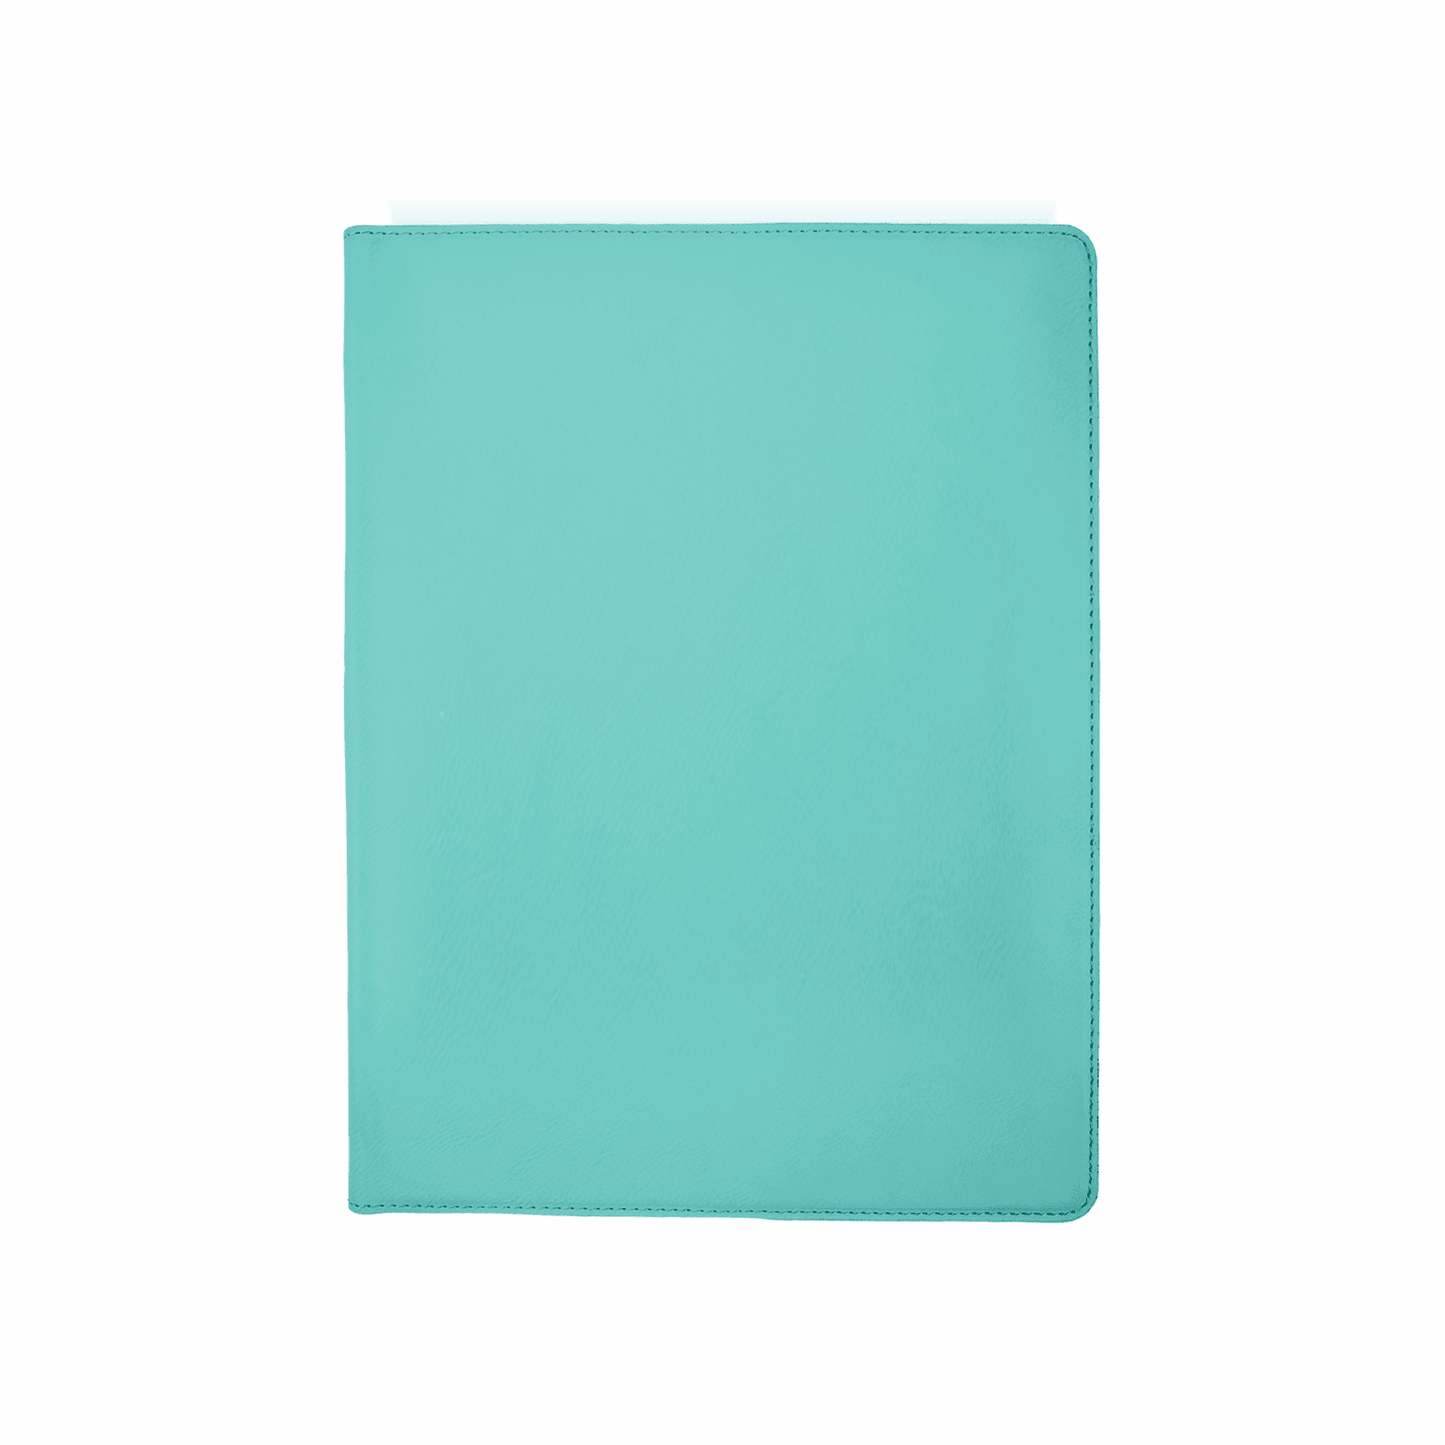 Leatherette Portfolio with Notepad